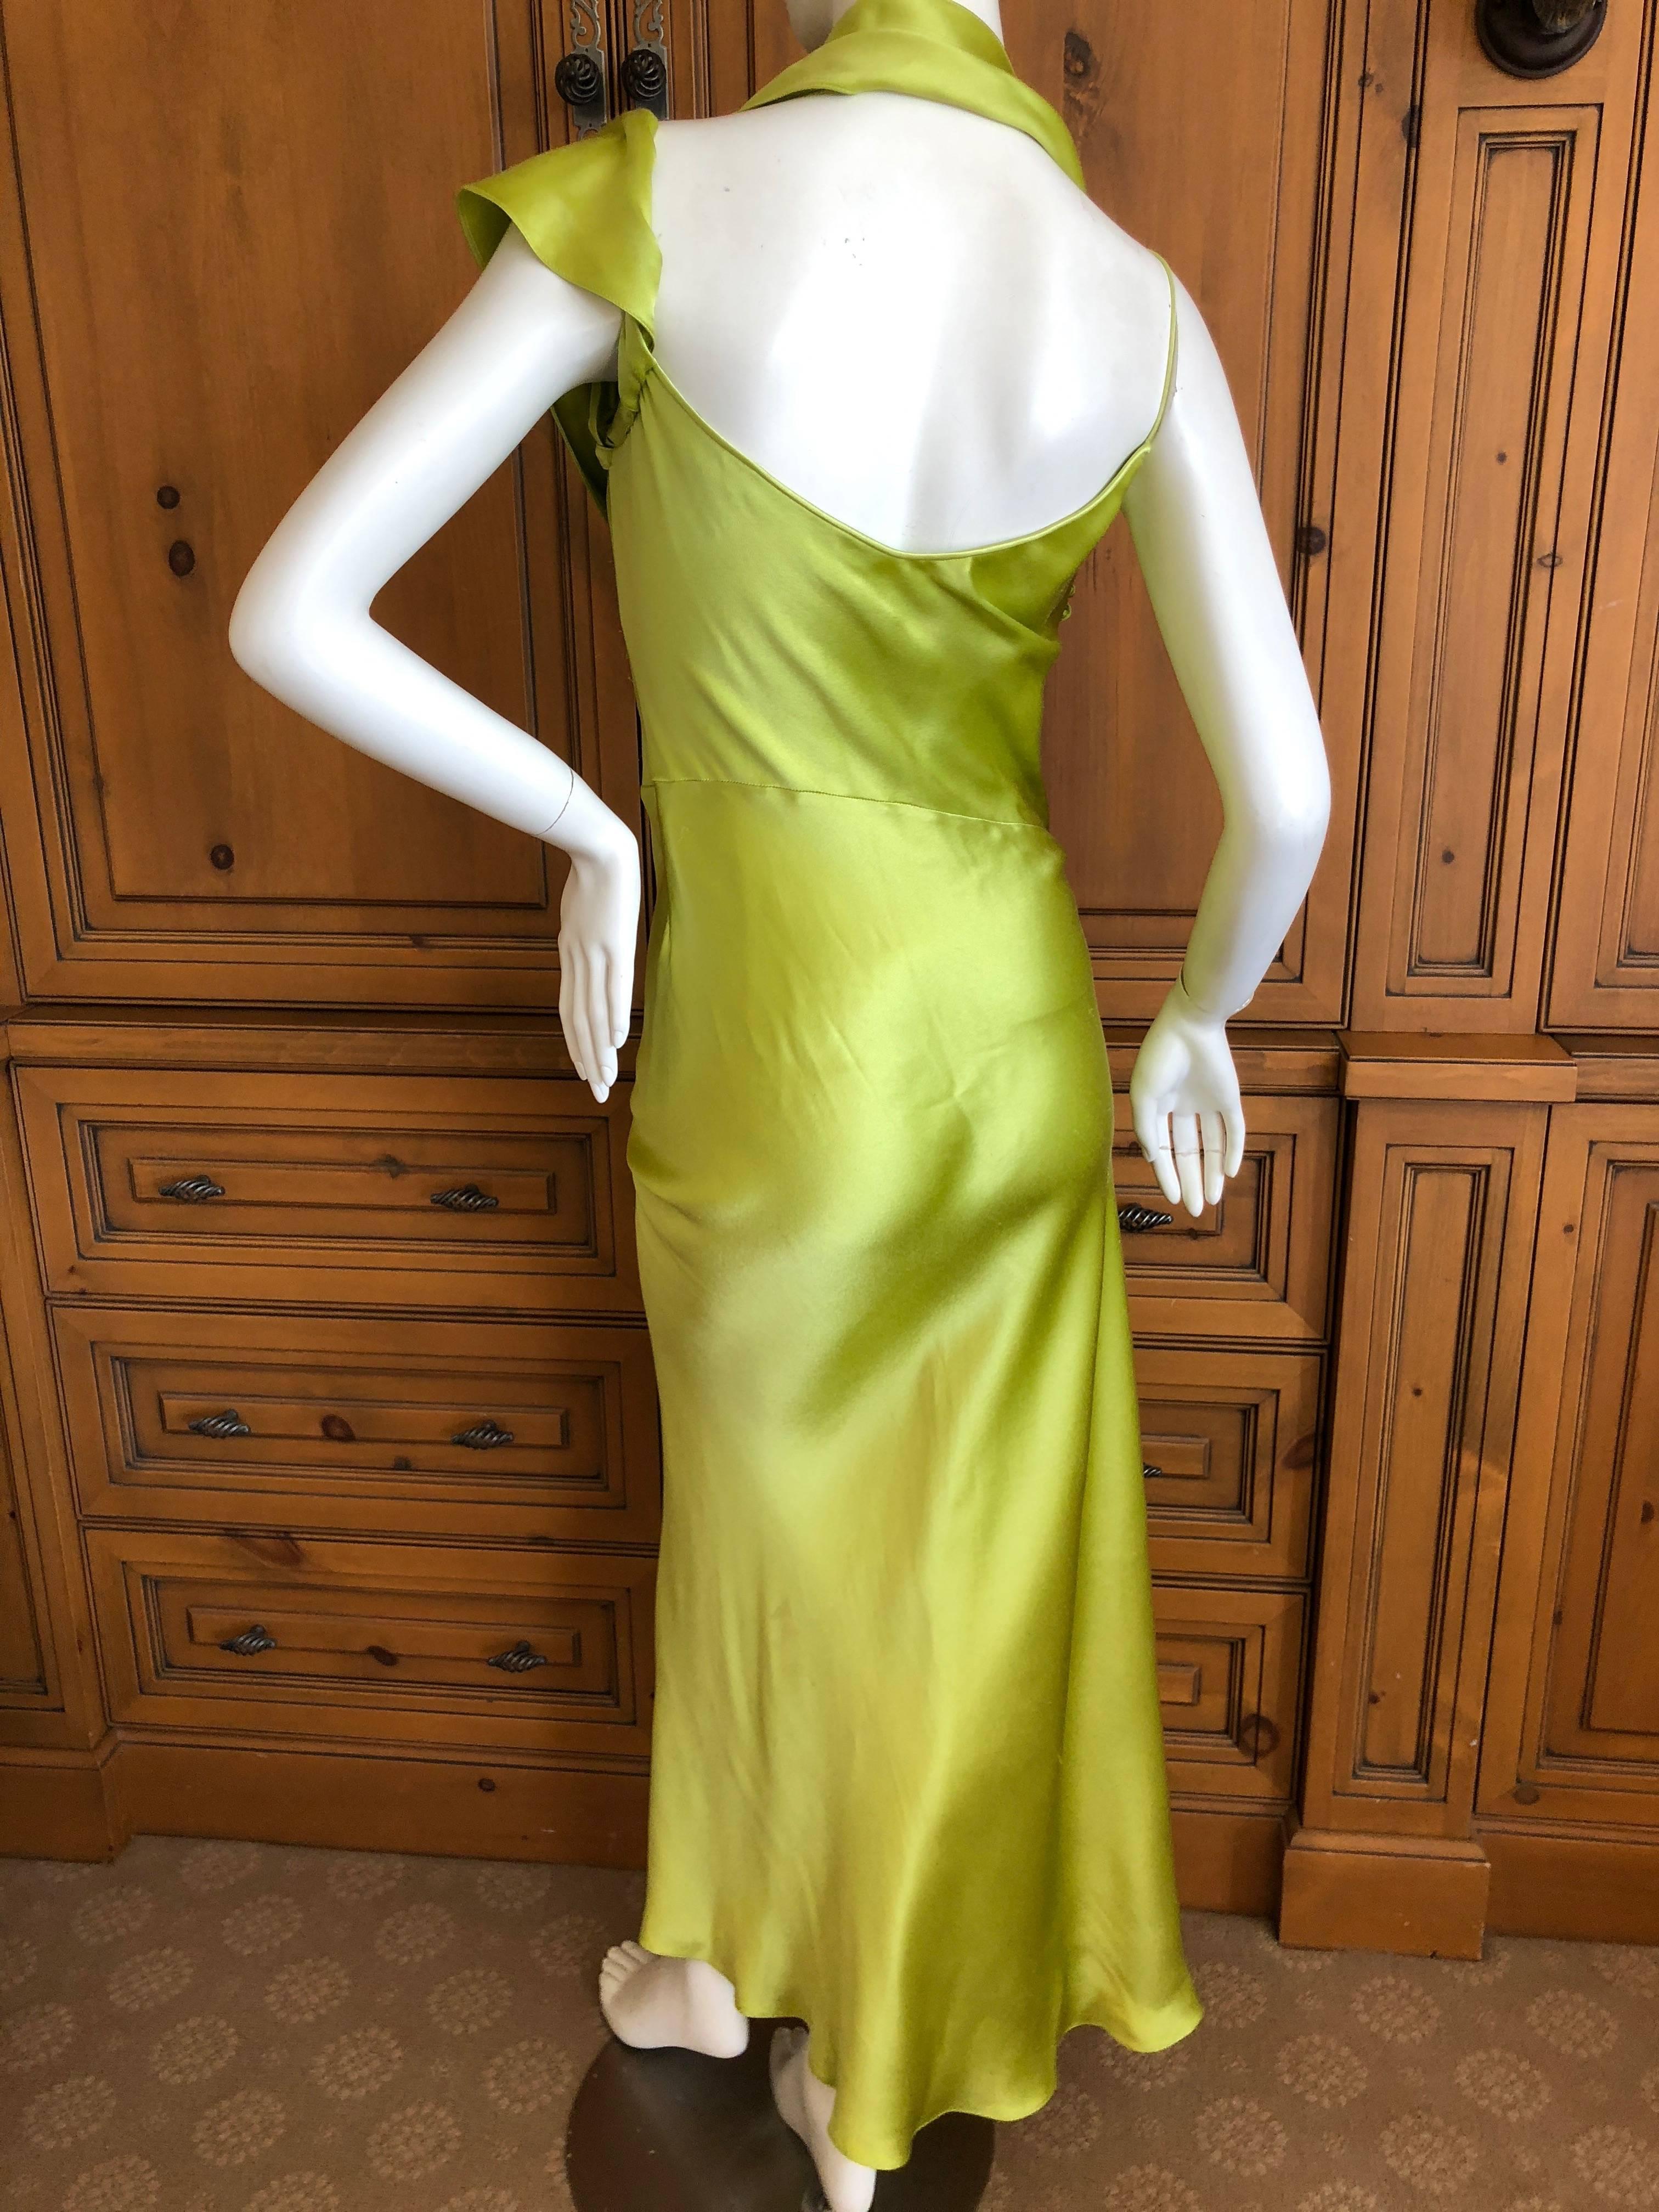 Women's Christian Dior by John Galliano Bias Cut Green Silk Satin Dress with Knot Motif